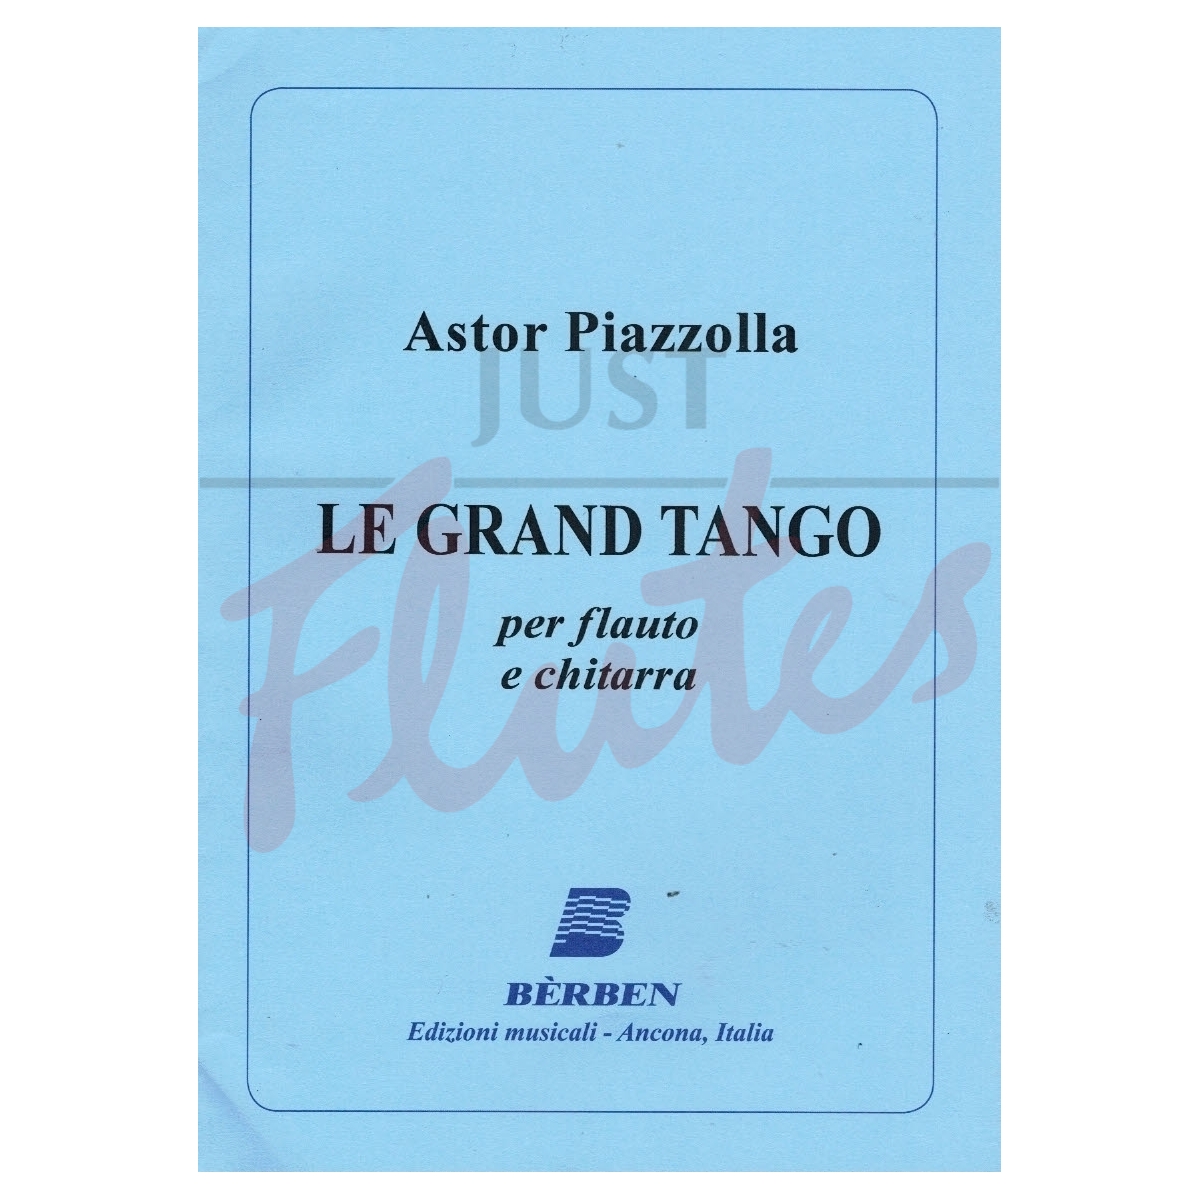 Le Grand Tango [Flute and Guitar]